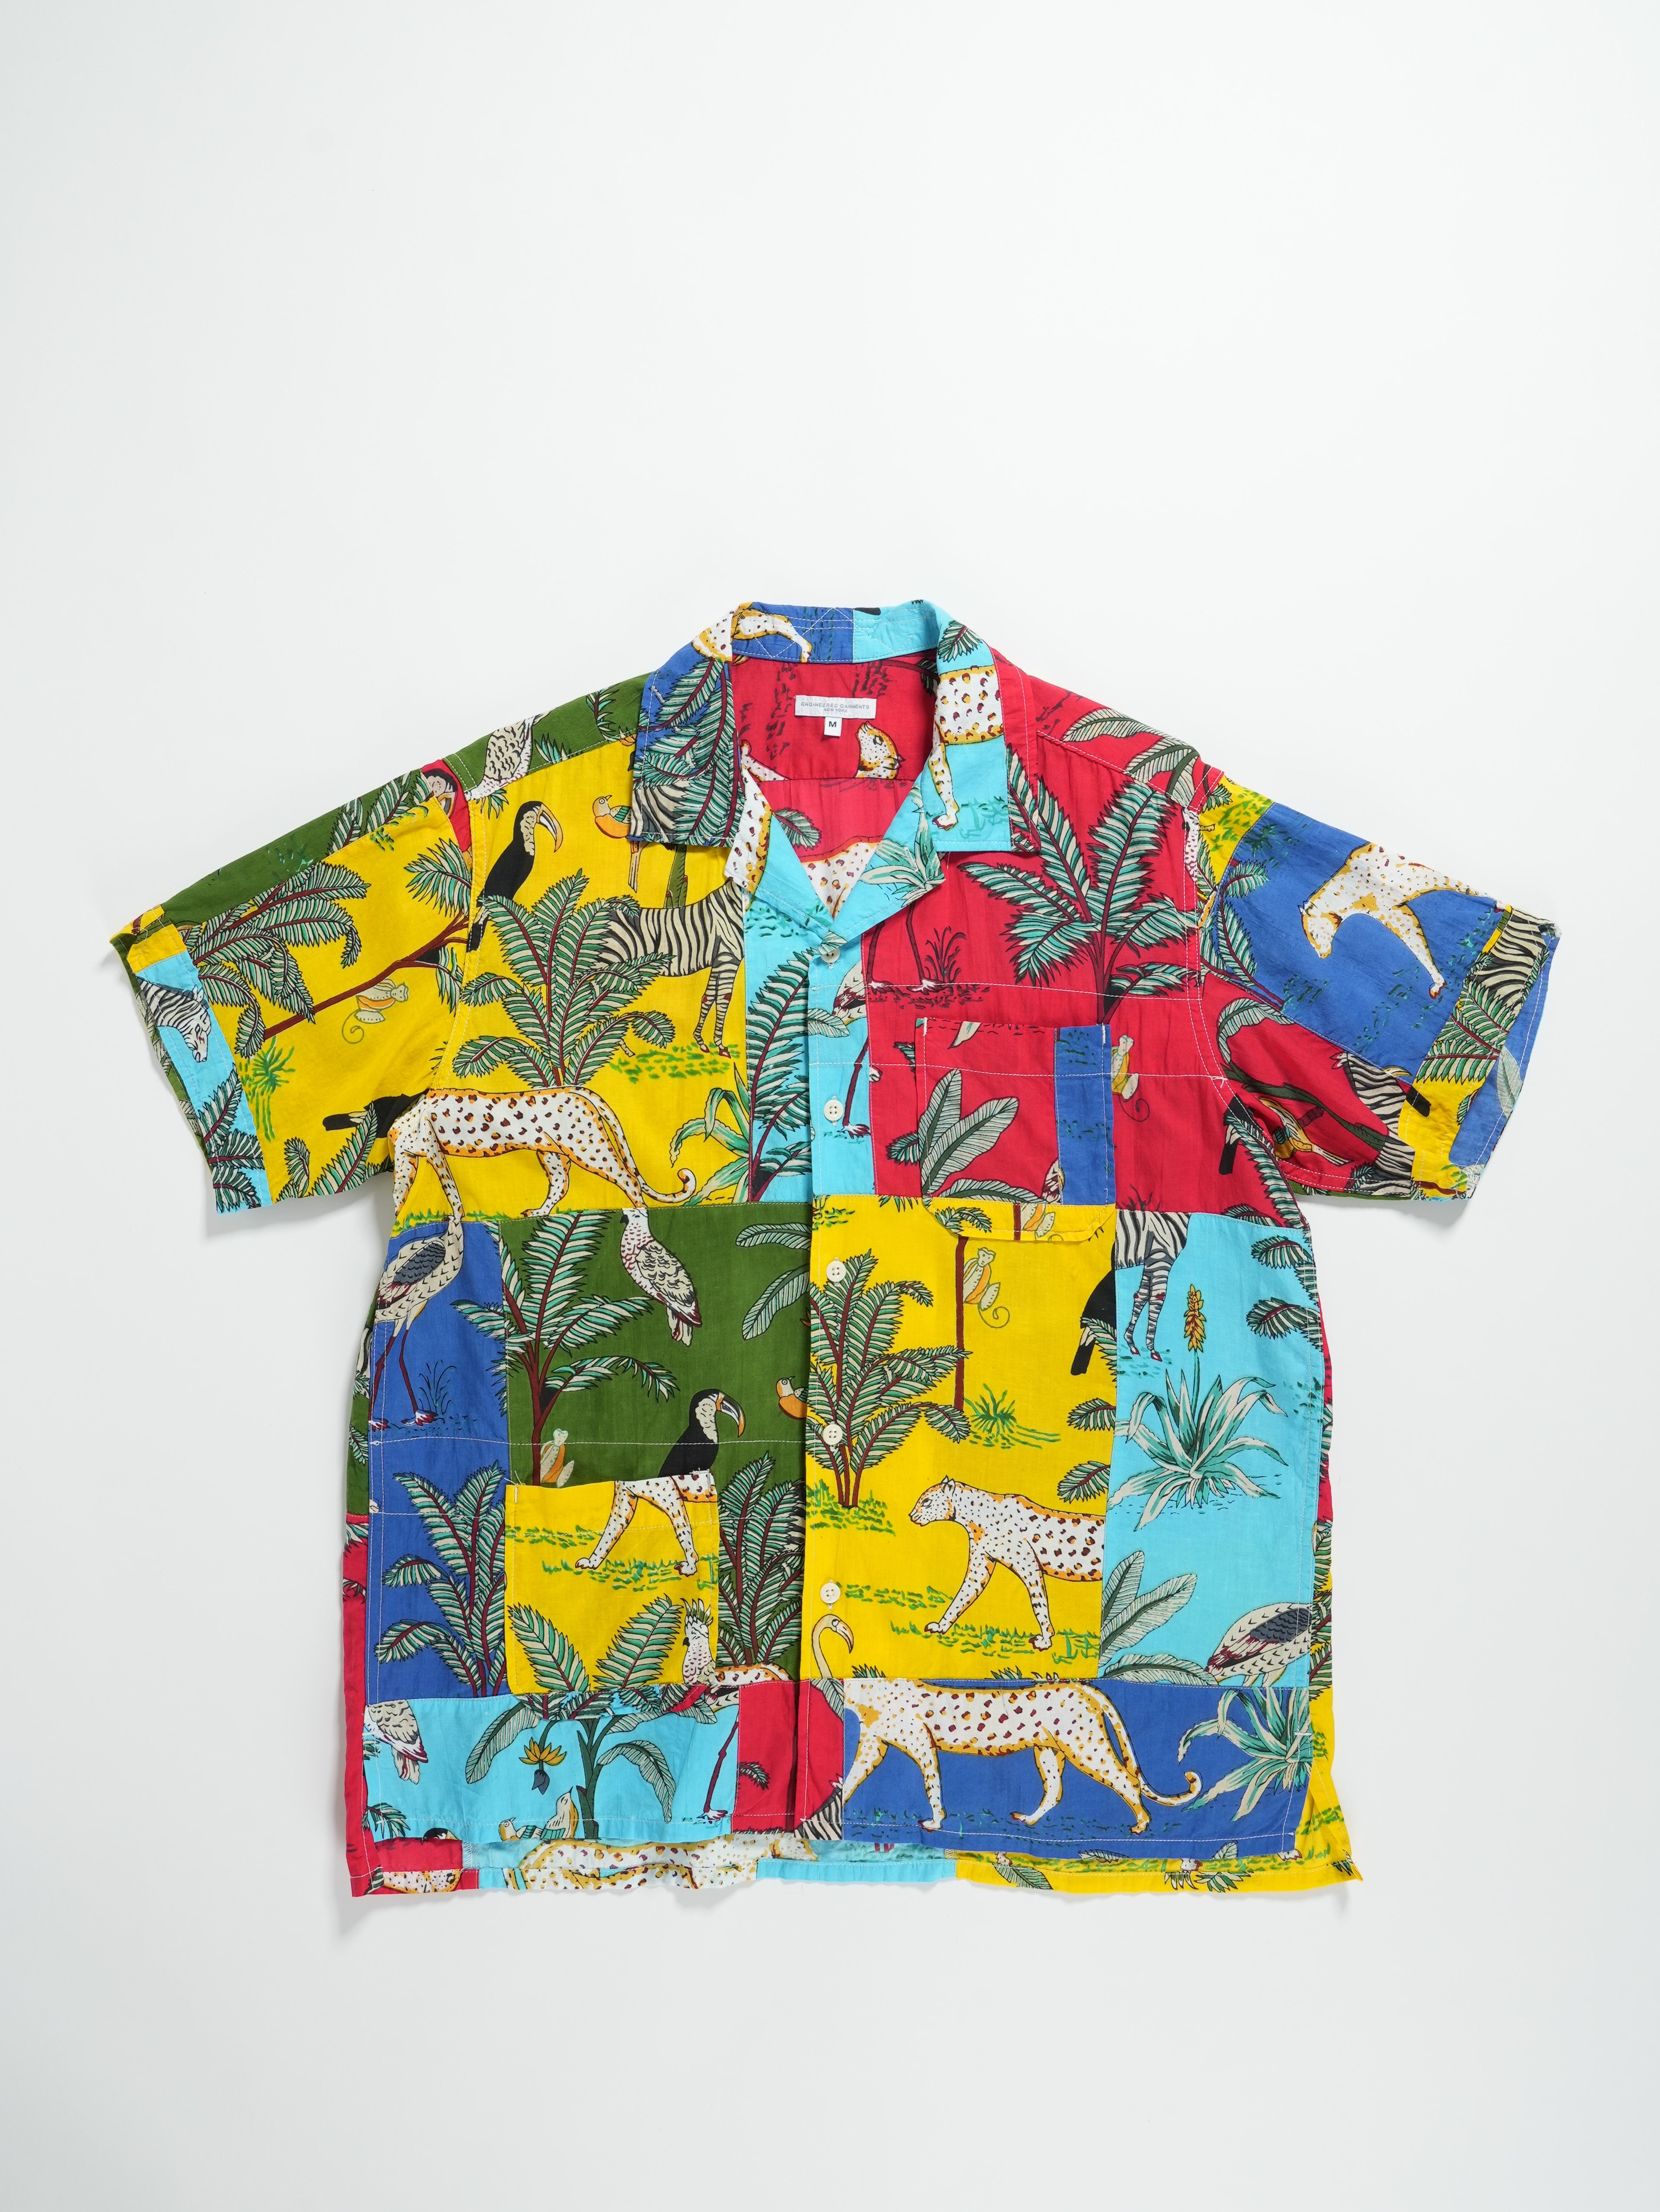 Camp Shirt - Multi Color Animal Print Patchwork